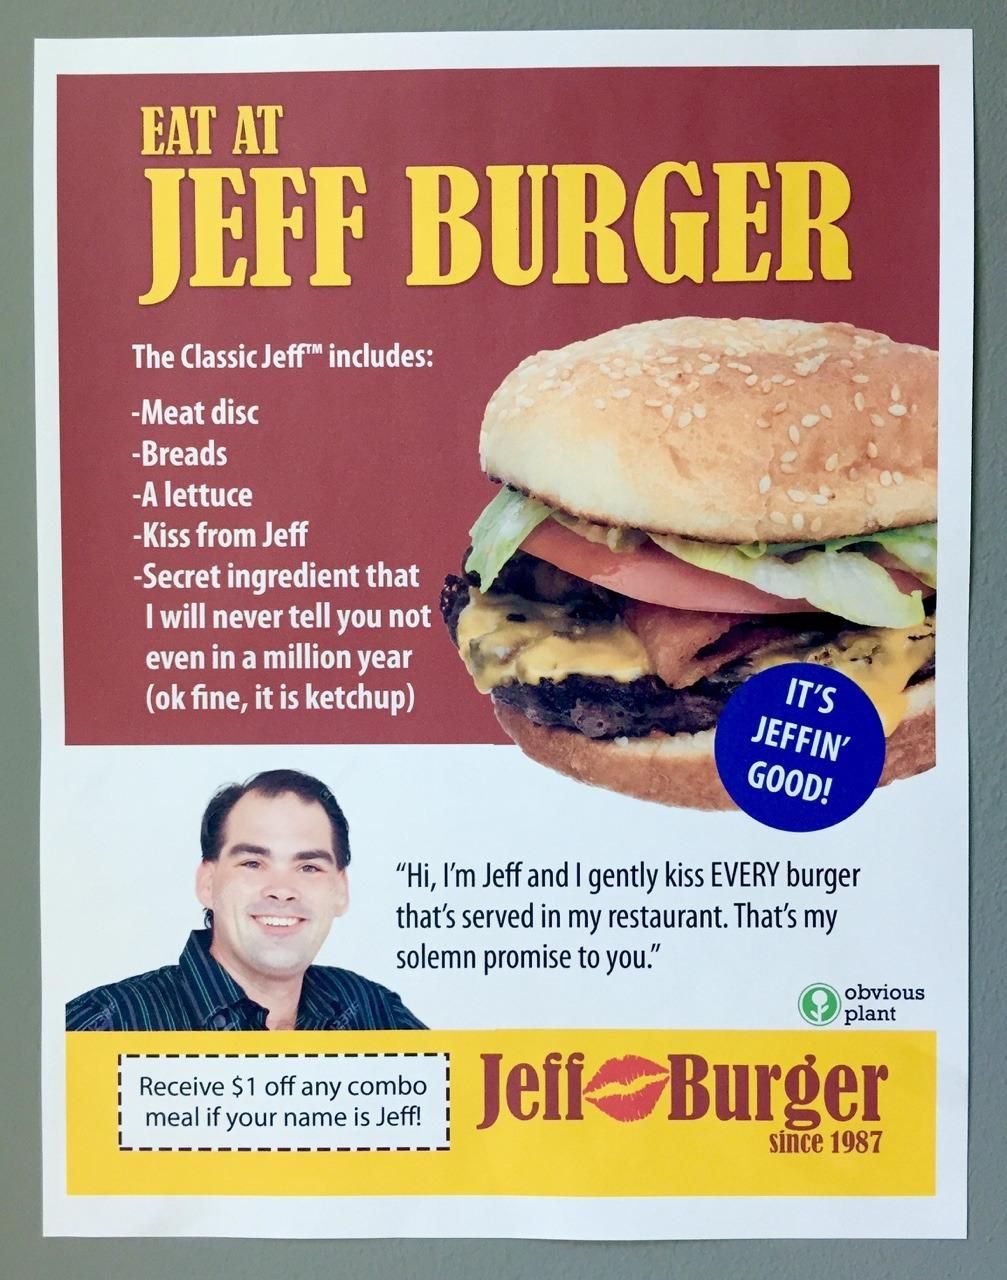 Eat at Jeff Burger!